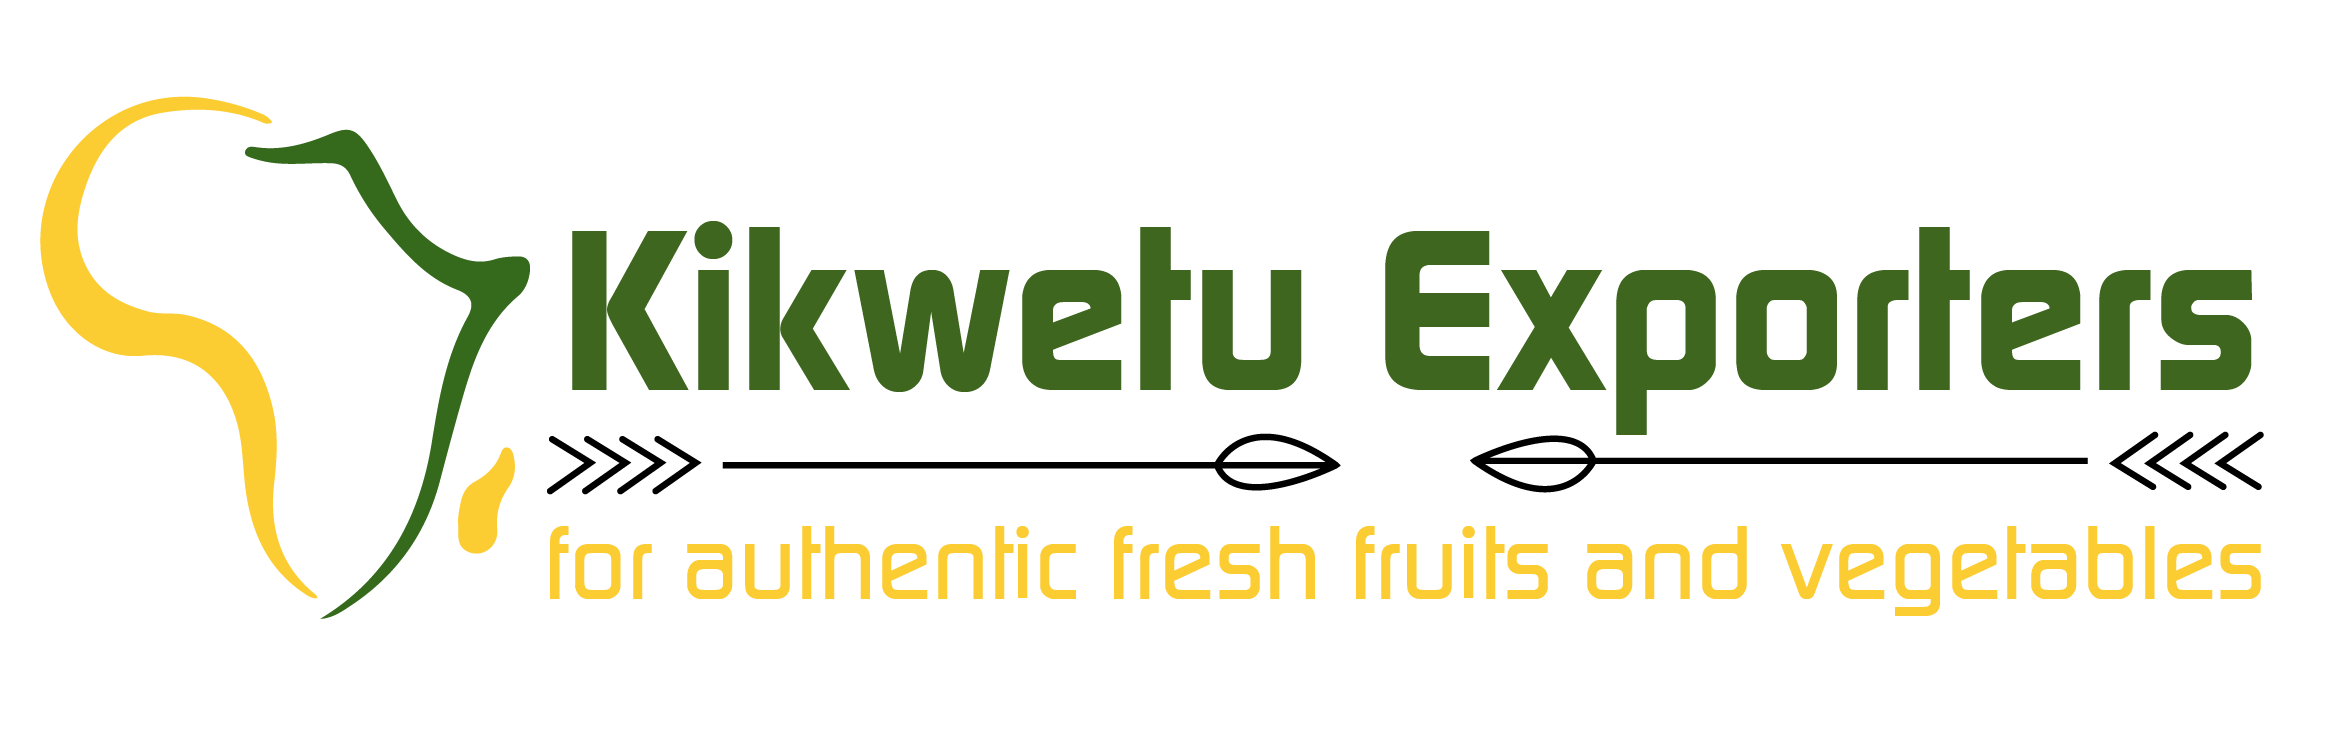 Kikwetu Exporters